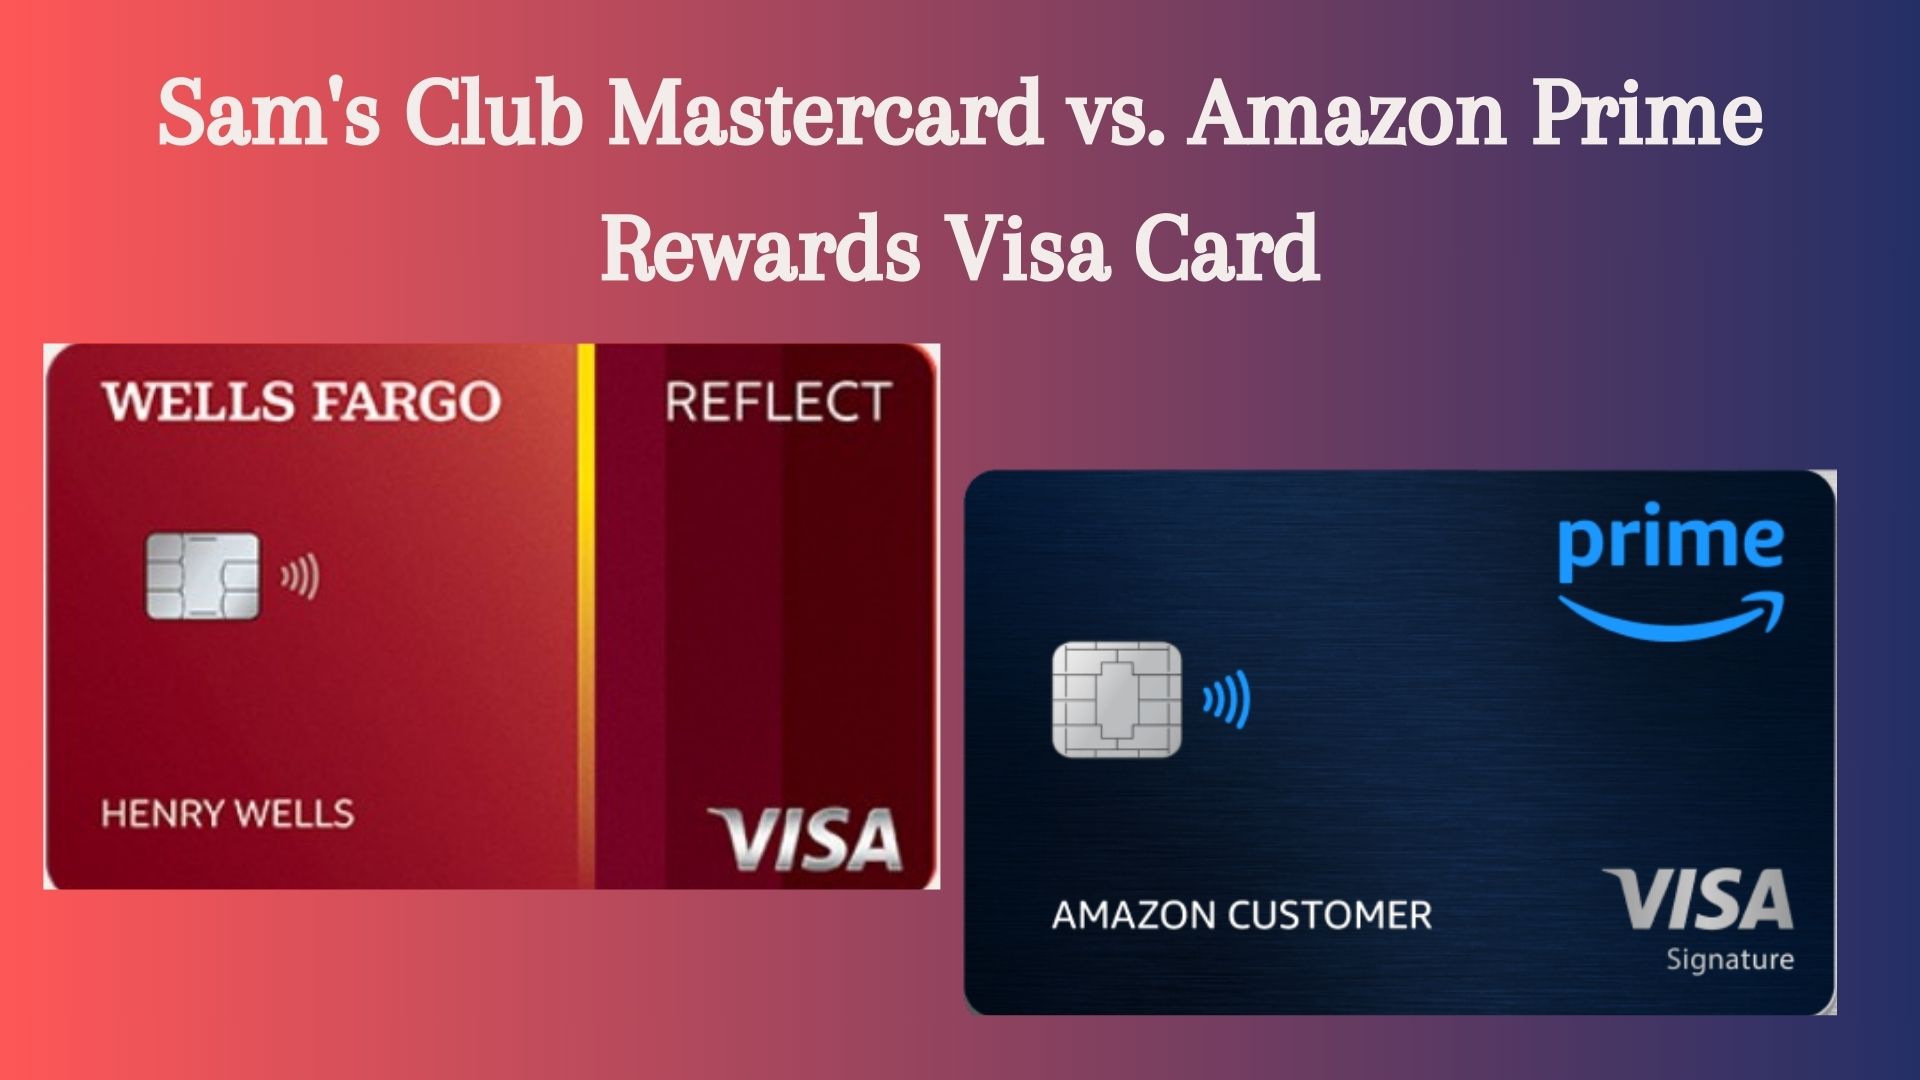 Sam's Club Mastercard vs. Amazon Prime Rewards Visa Card